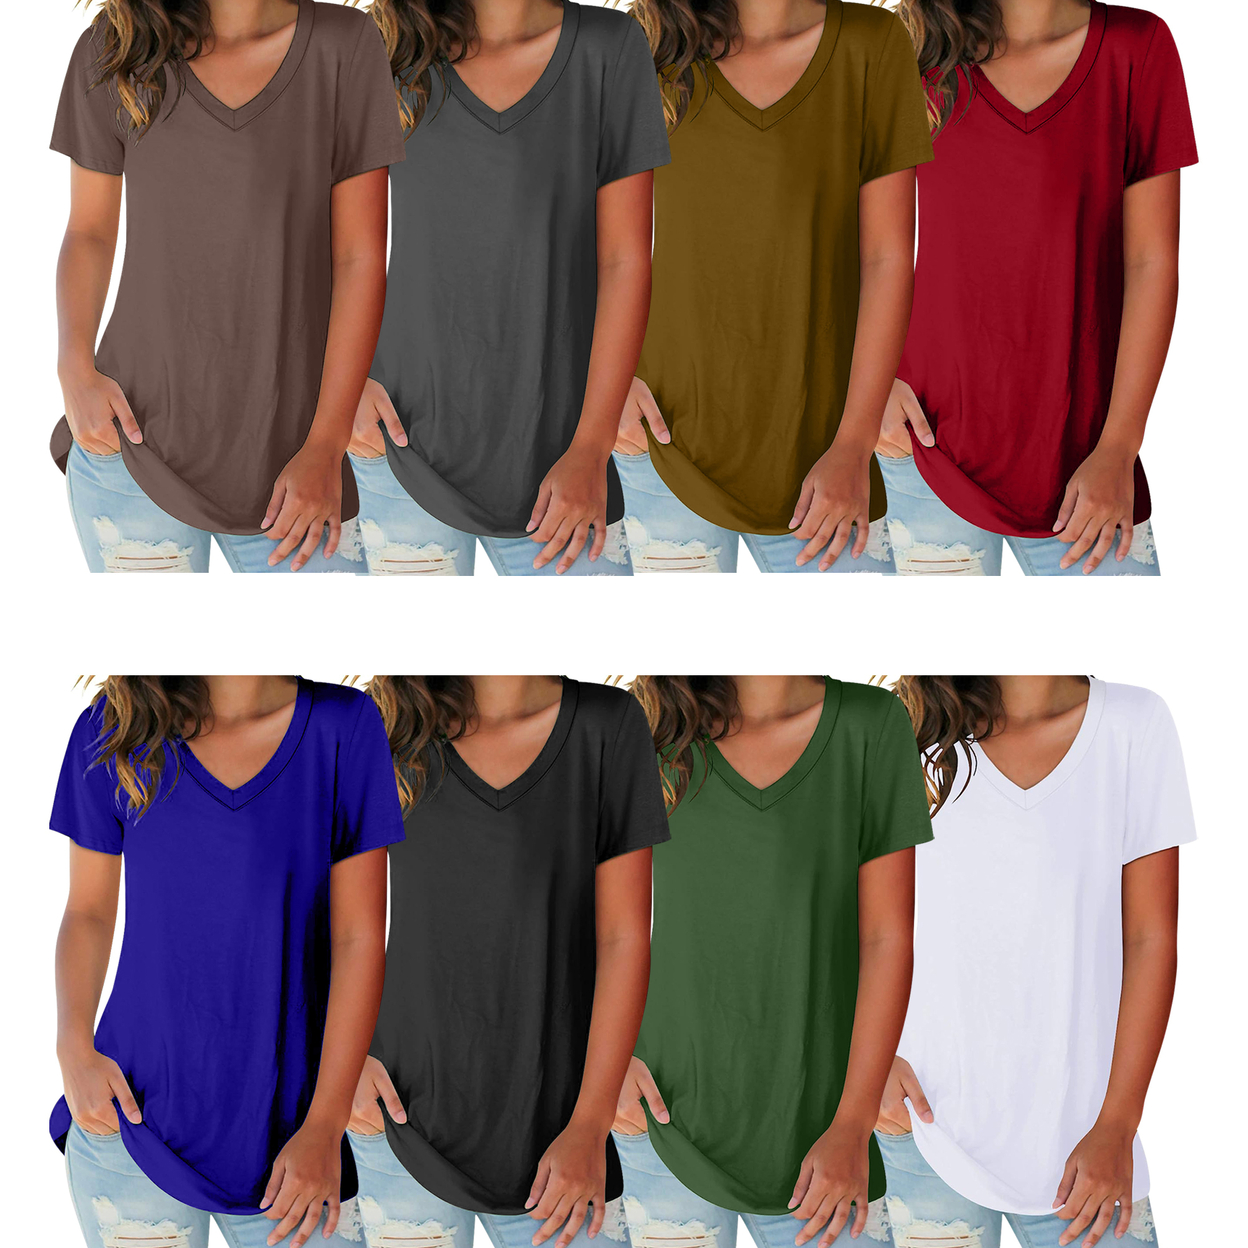 2-Pack: Women's Ultra Soft Smooth Cotton Blend Basic V-Neck Short Sleeve Shirts - Black & Grey, Large